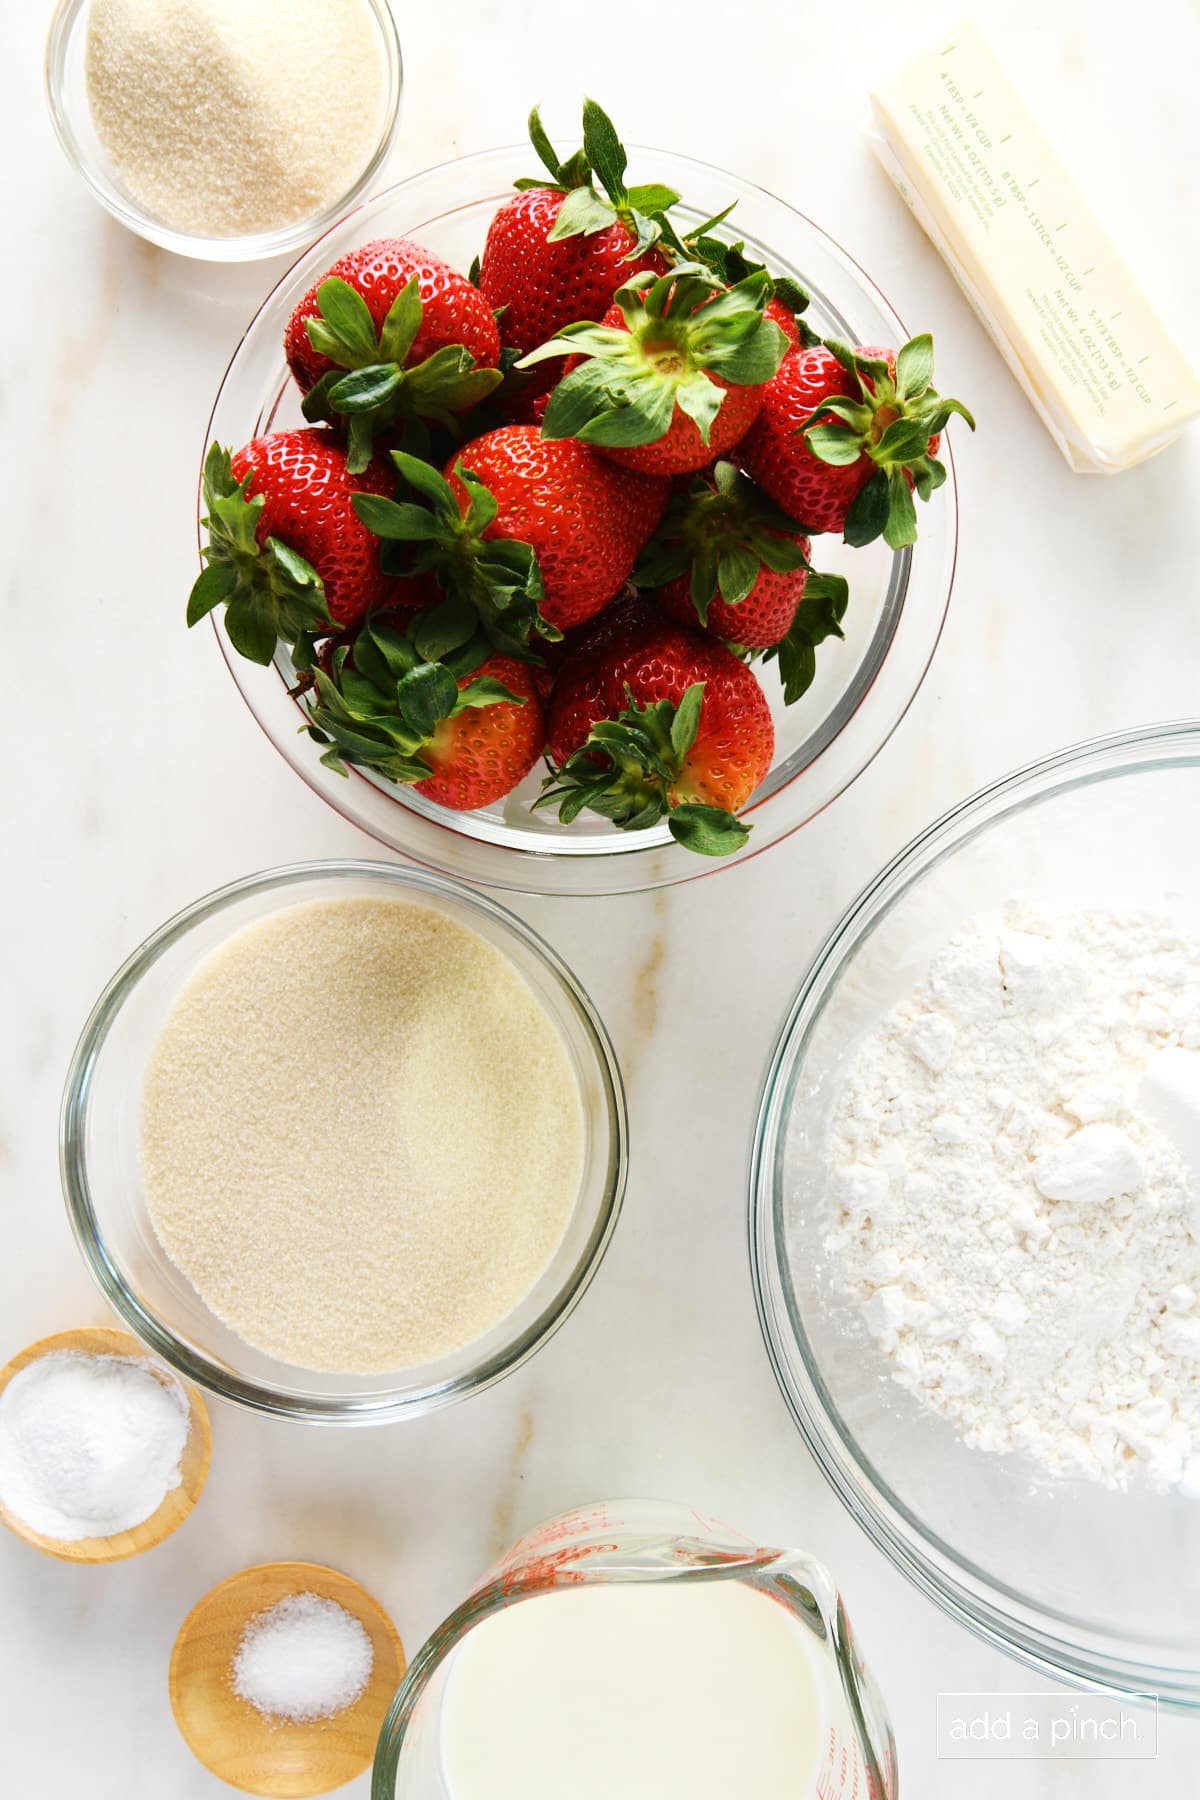 Ingredients to make strawberry cobbler recipe